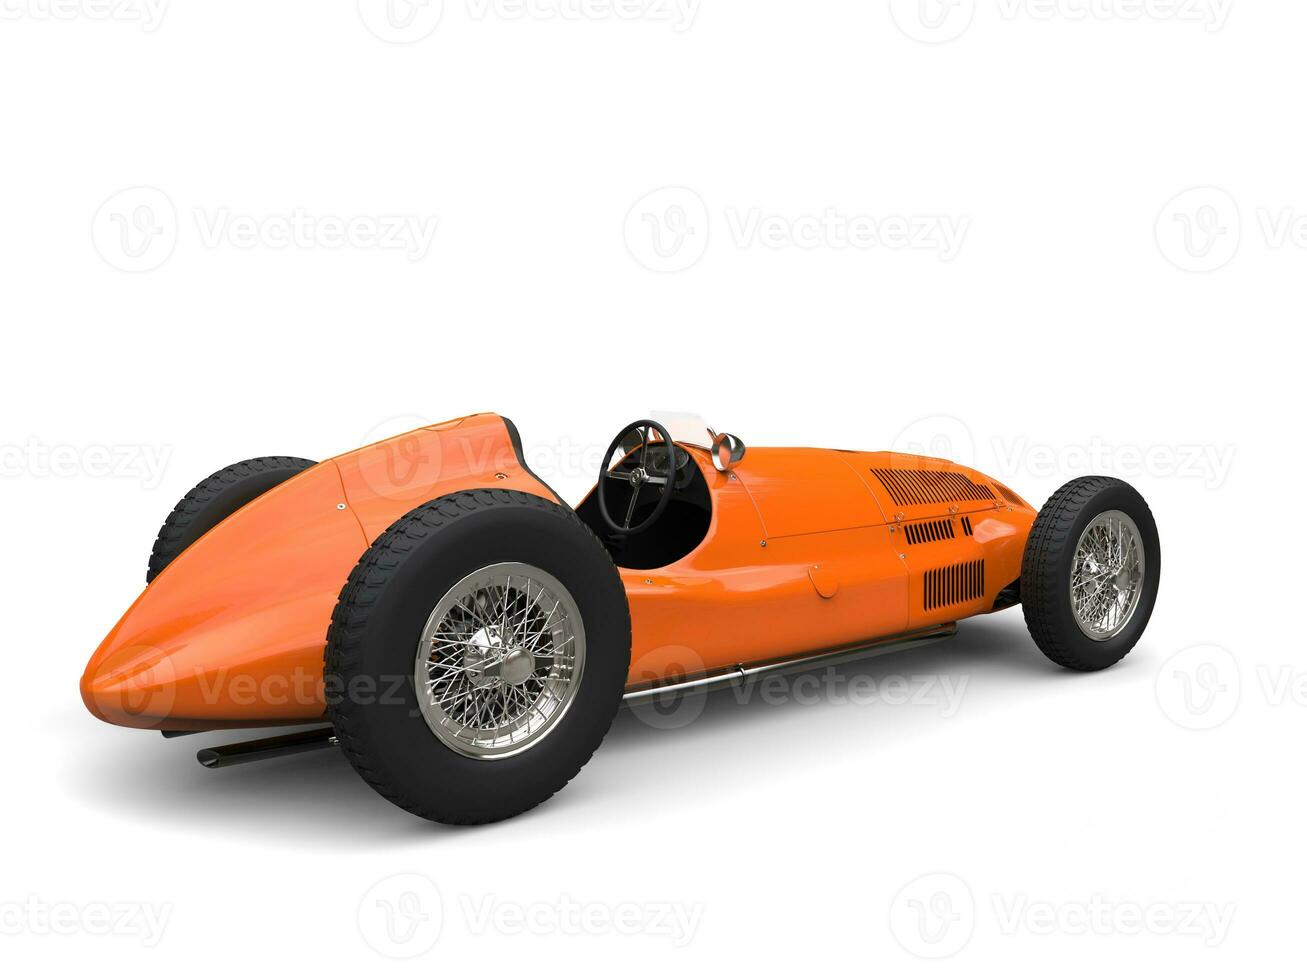 flammande orange årgång lopp sporter bil - bak- sida se foto